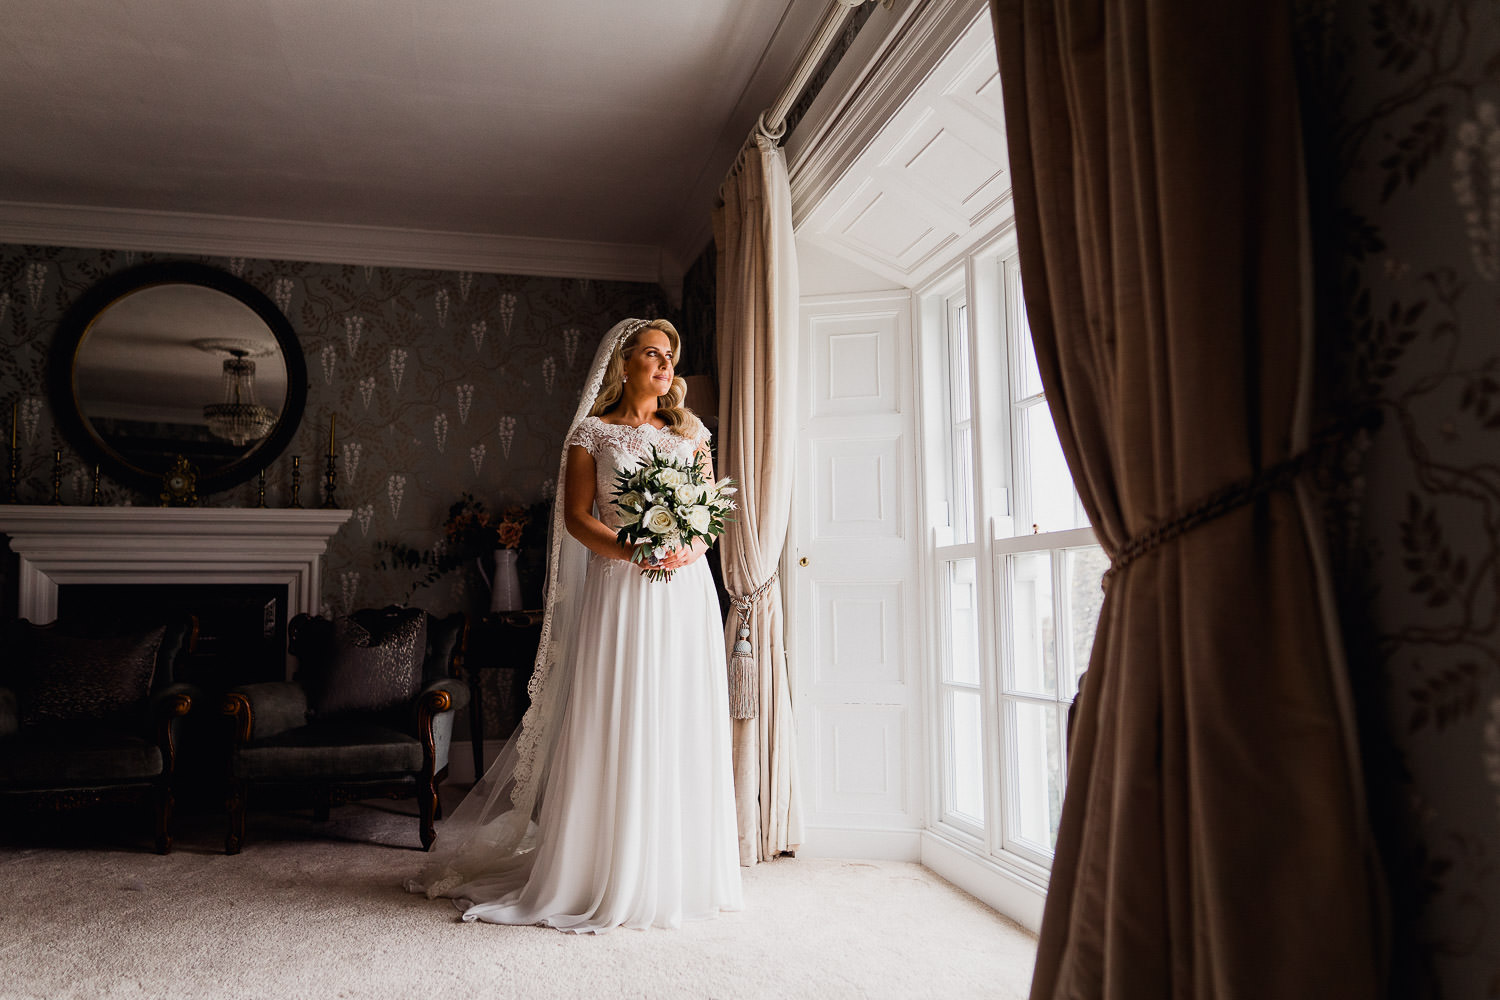 bride standing in window light holding flowers